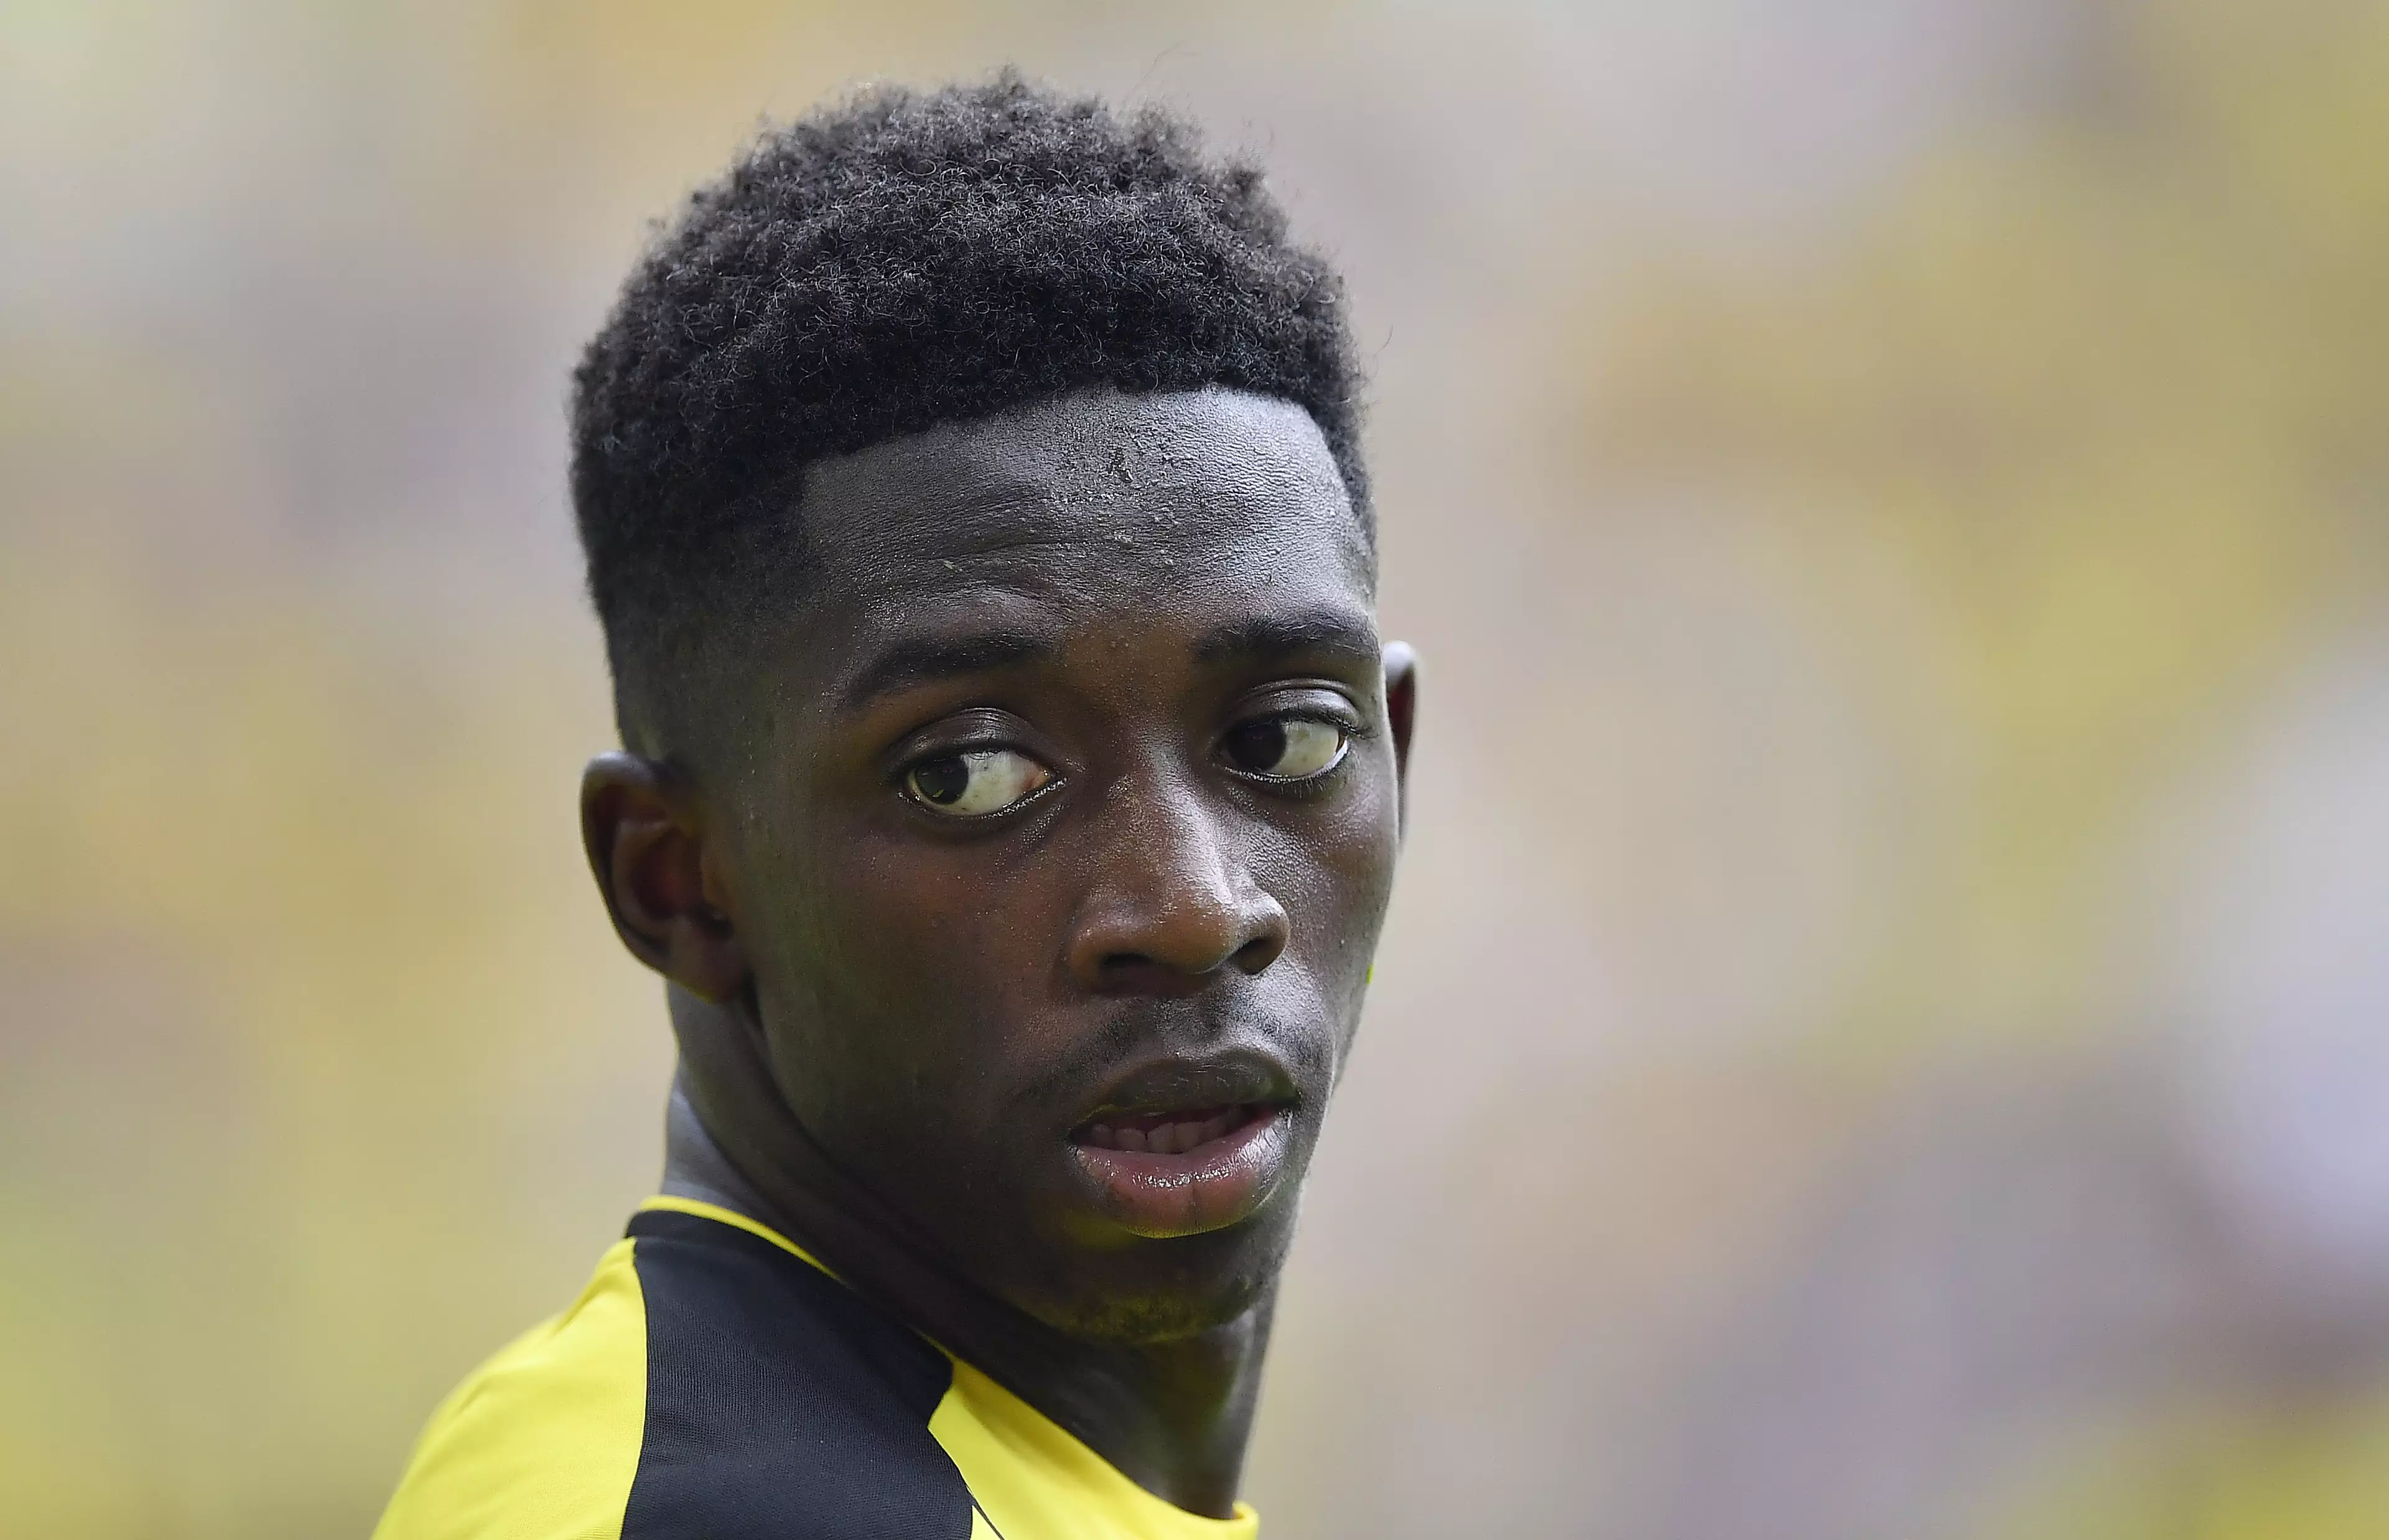 WATCH: Dortmund's Dembele Endures Grim Looking FIFA Forfeit